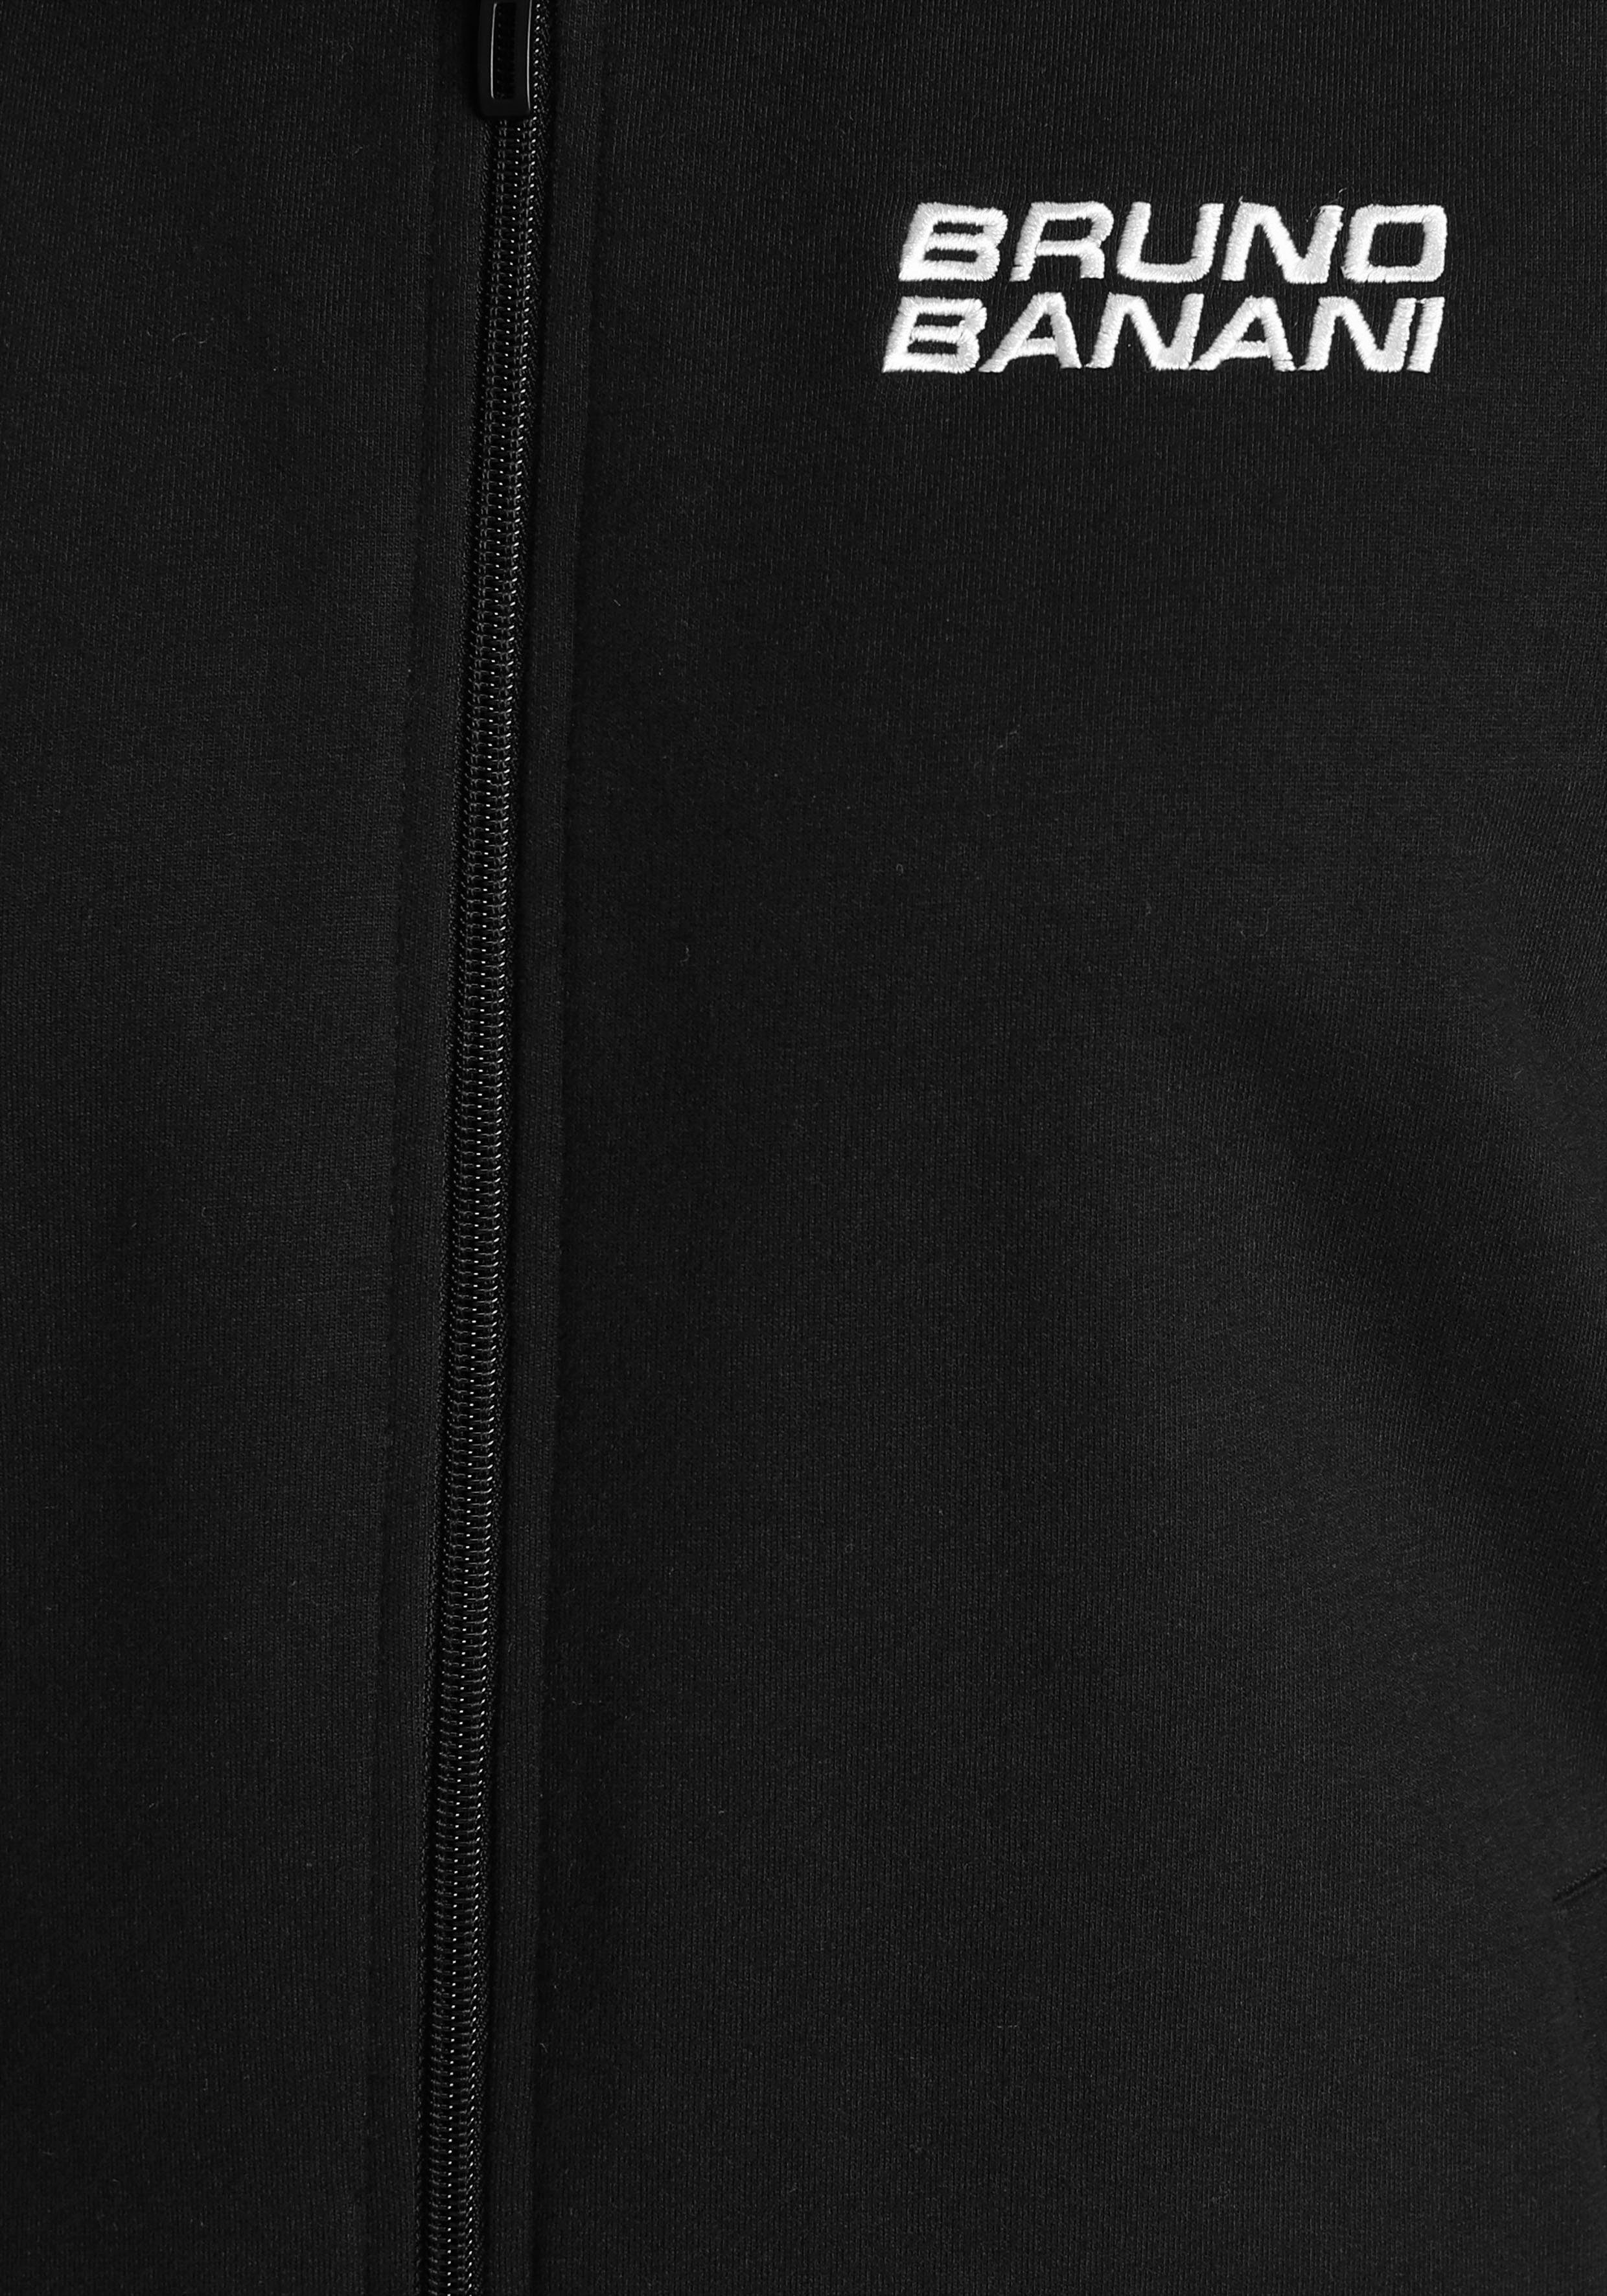 Bruno Banani Jogginganzug Comfort schwarz-grau Fit, Logo mit Stickerei